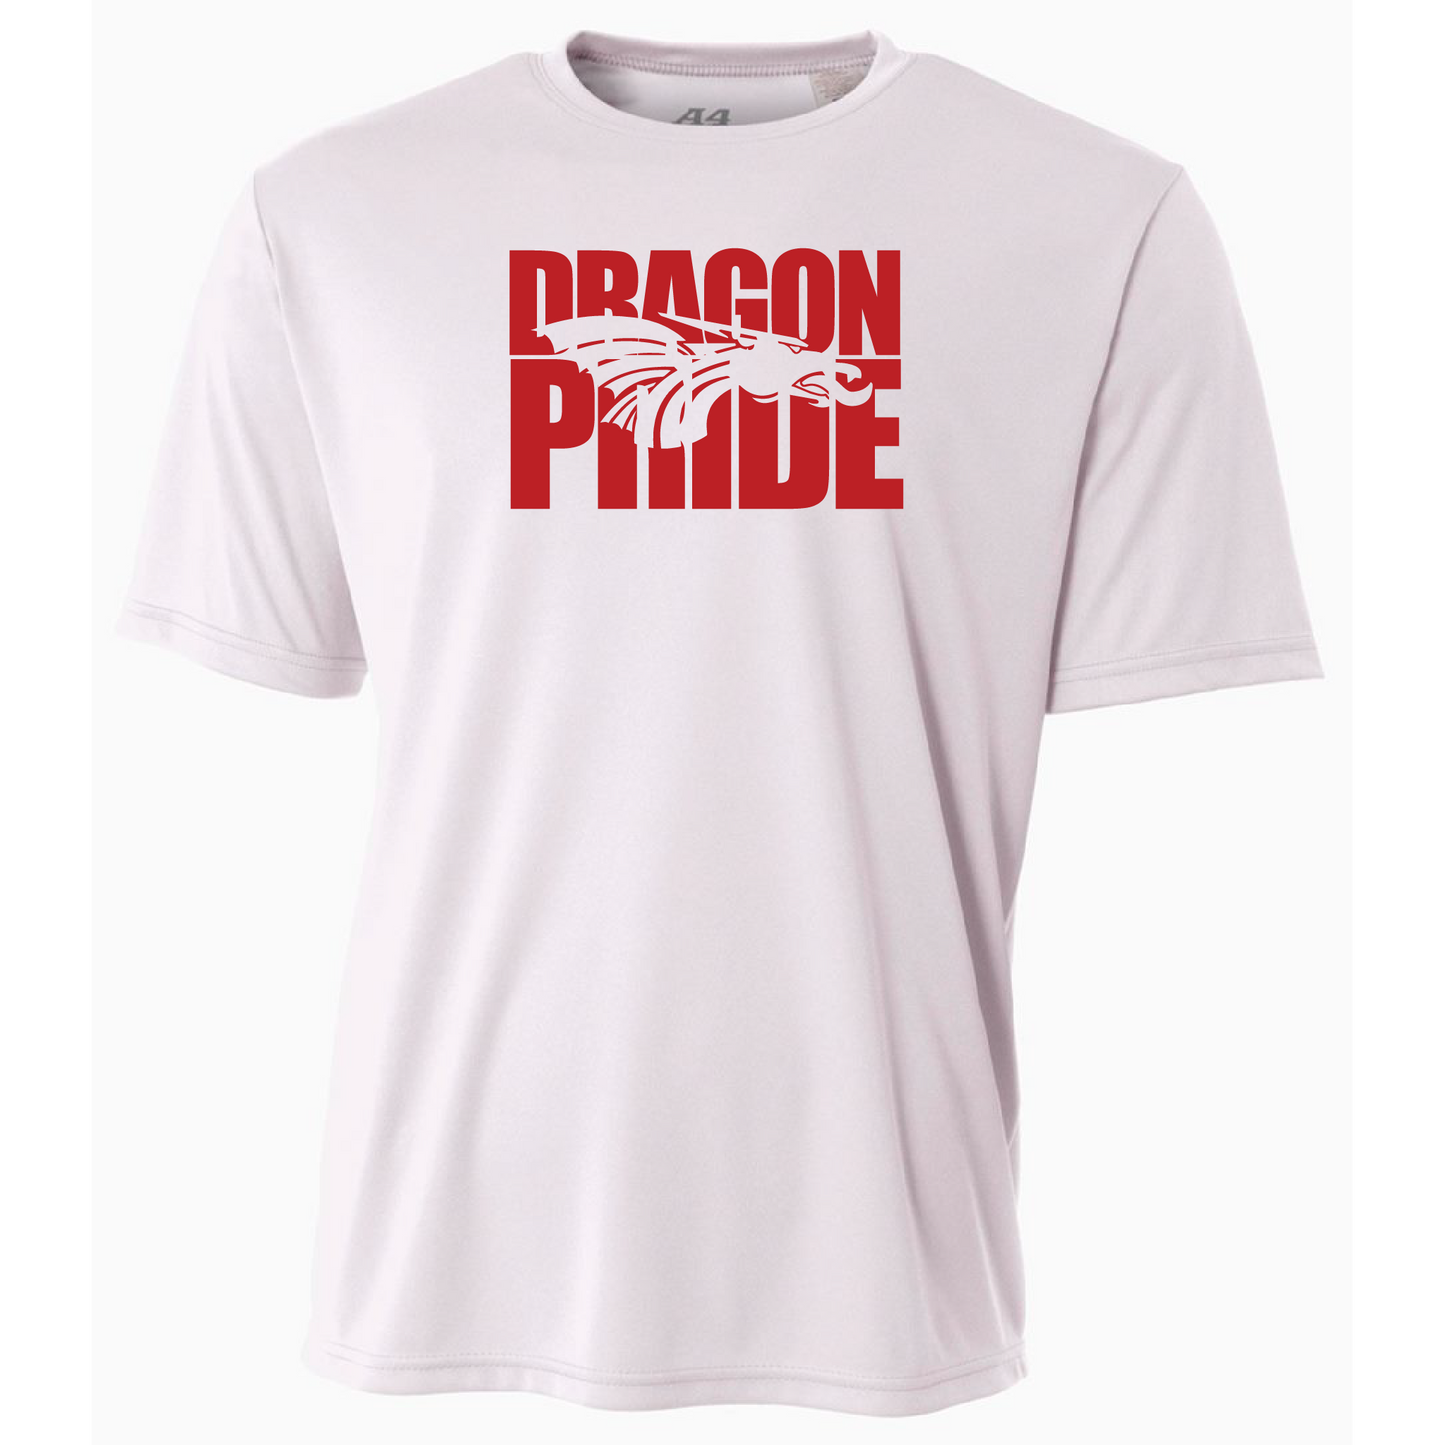 Mens S/S T-Shirt - Dragon Pride